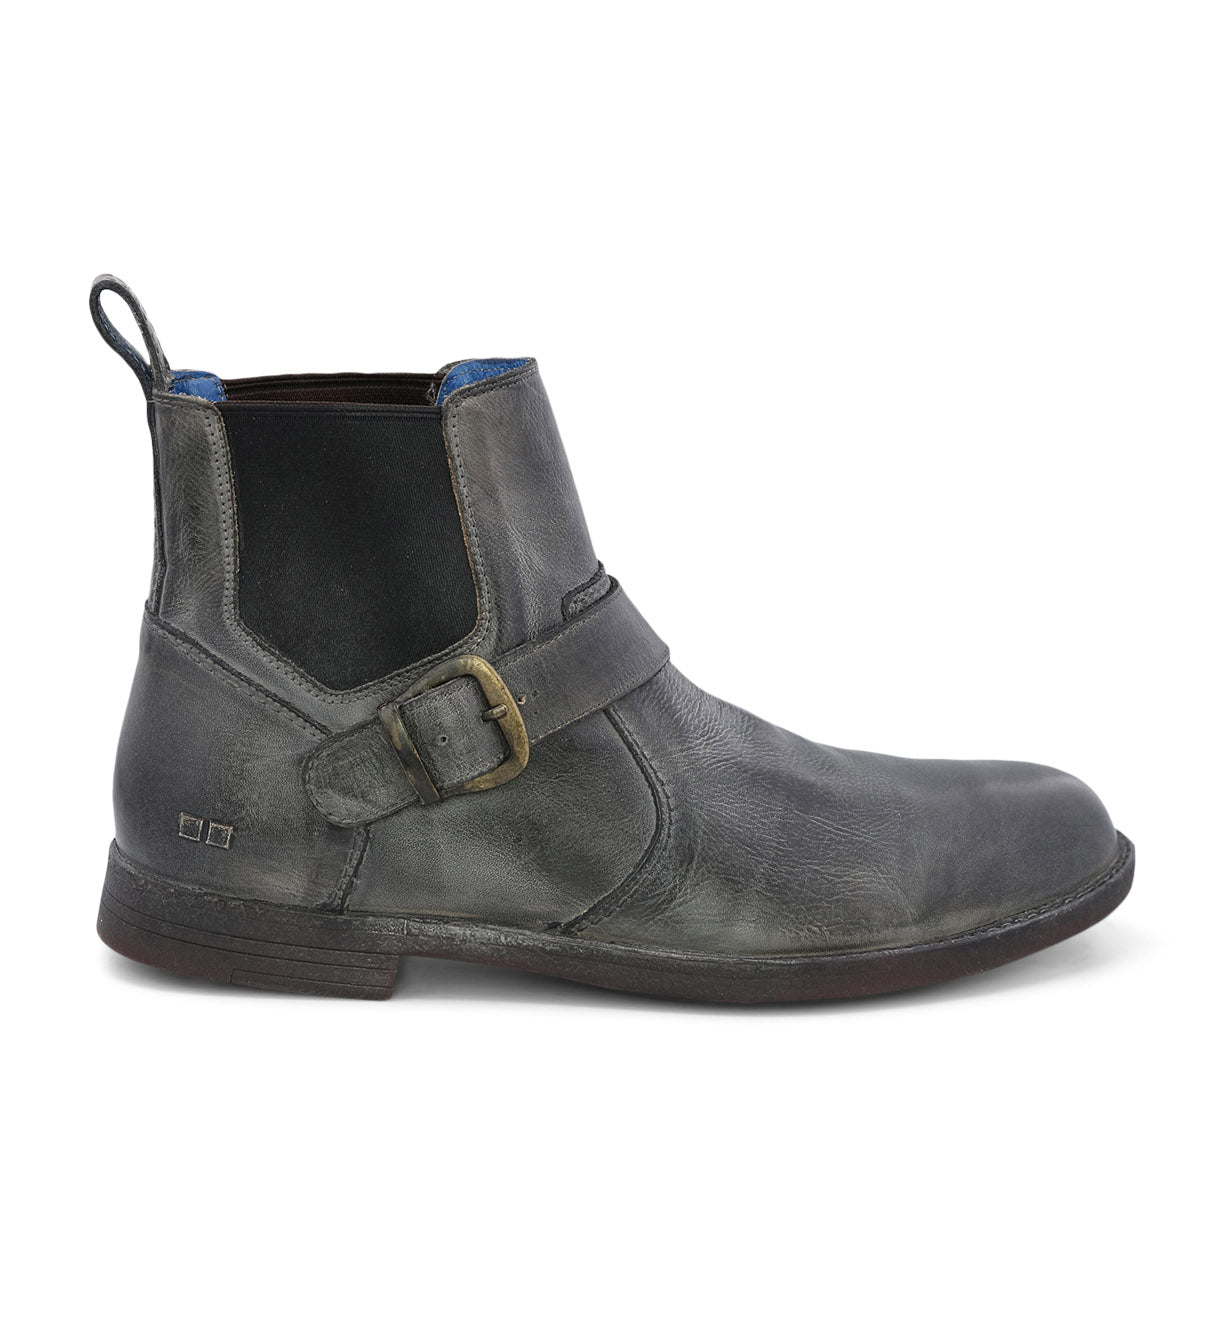 Men's grey leather Bed Stu Michelangelo chelsea boots.